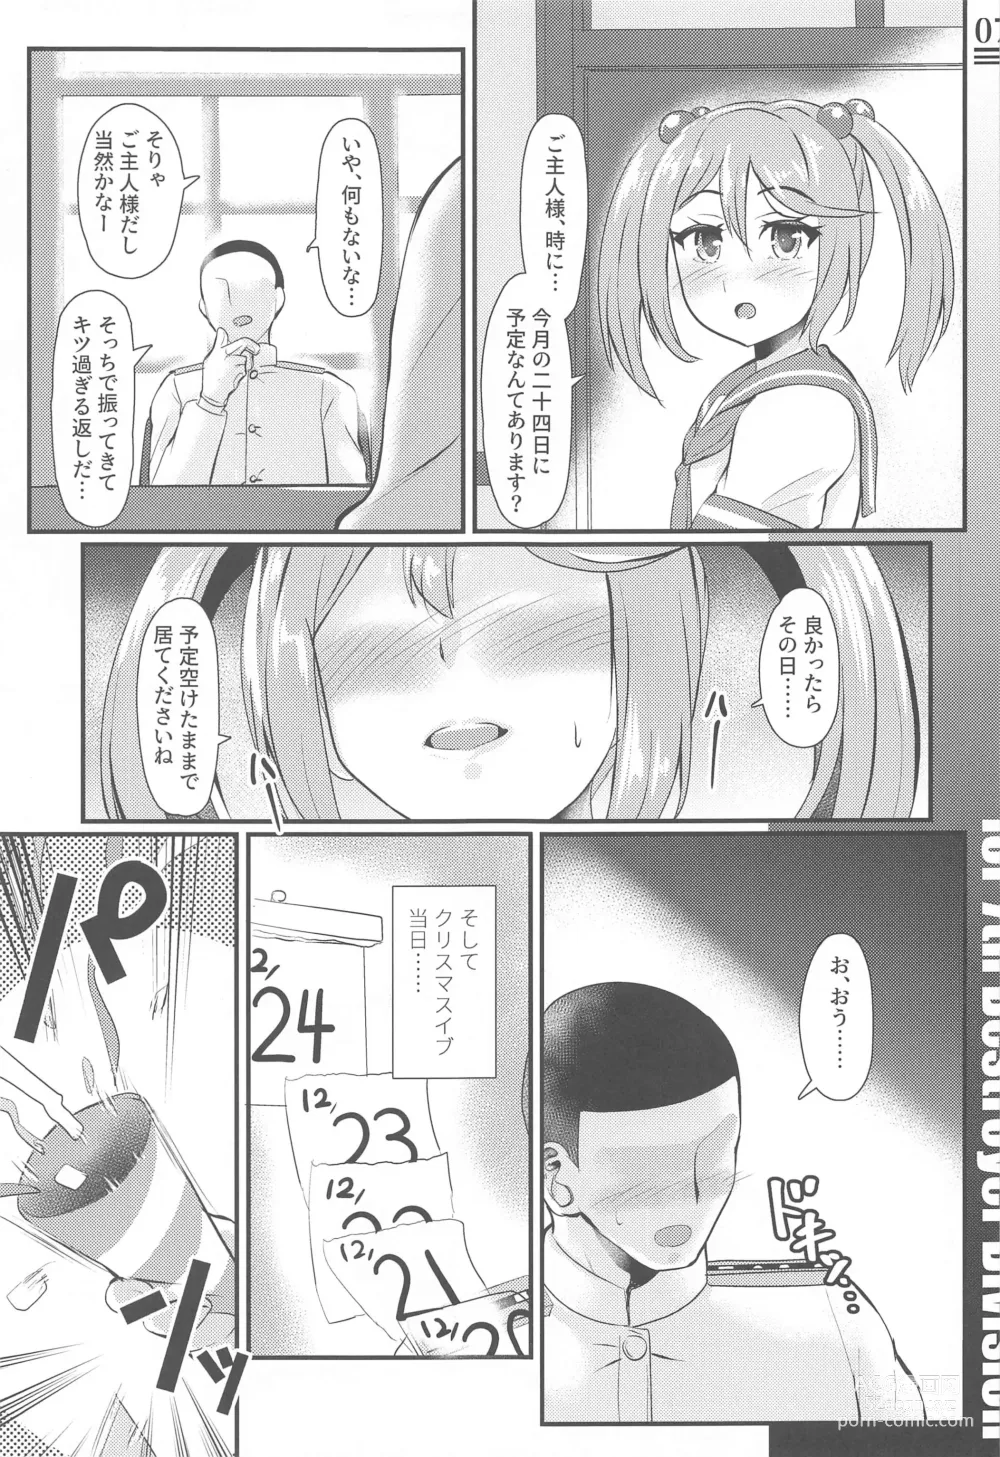 Page 5 of doujinshi Drive me crazy